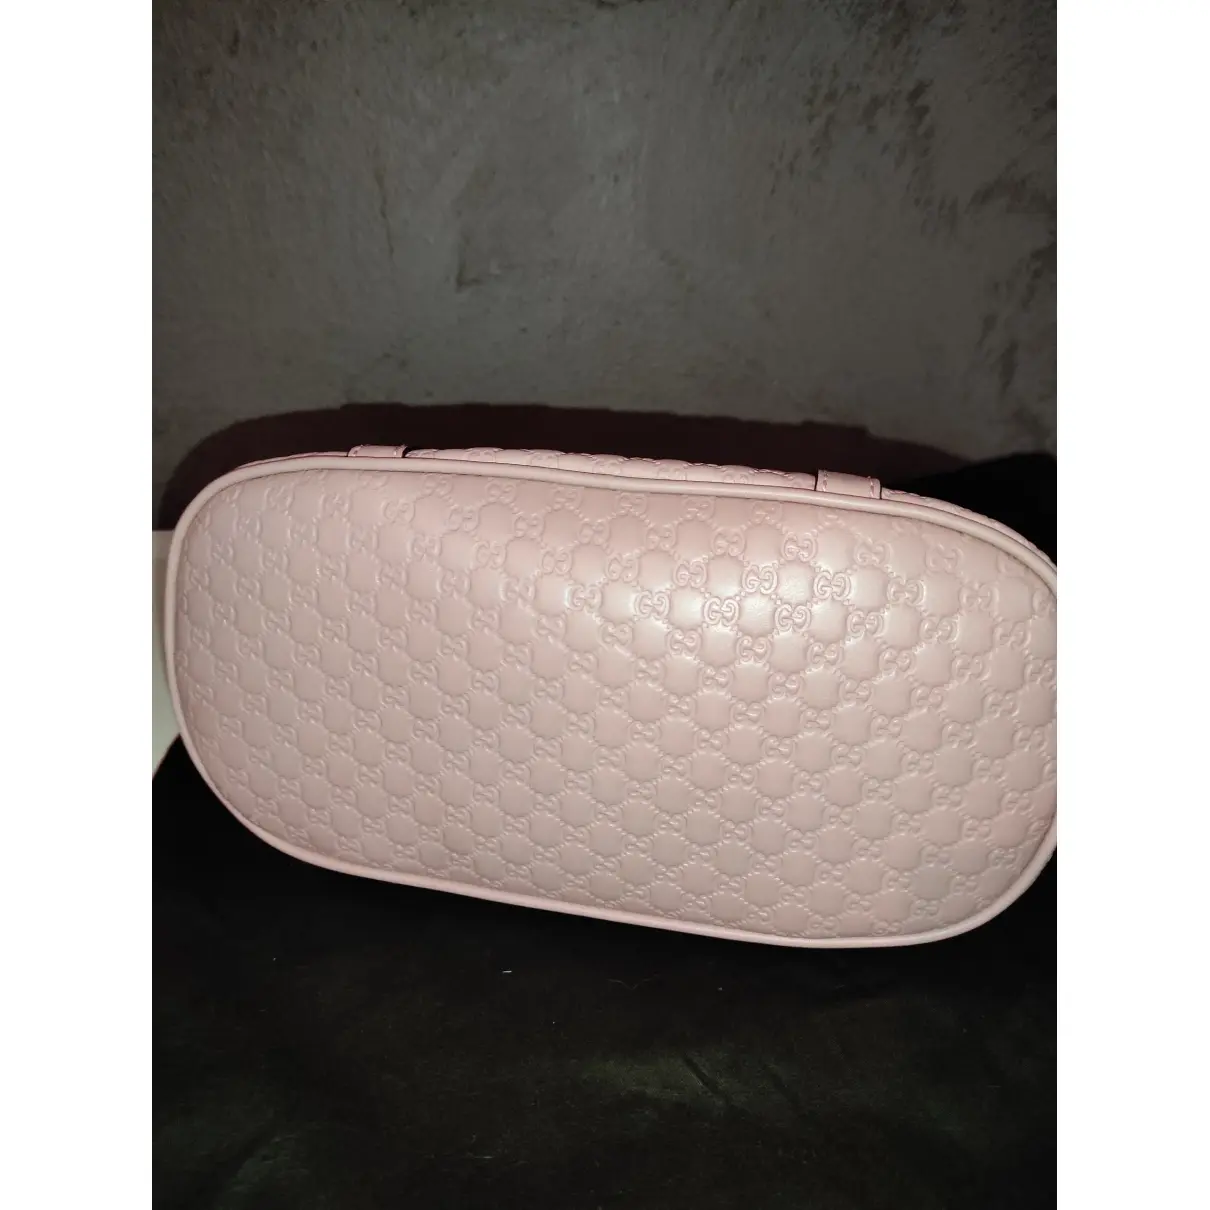 Dôme leather handbag Gucci